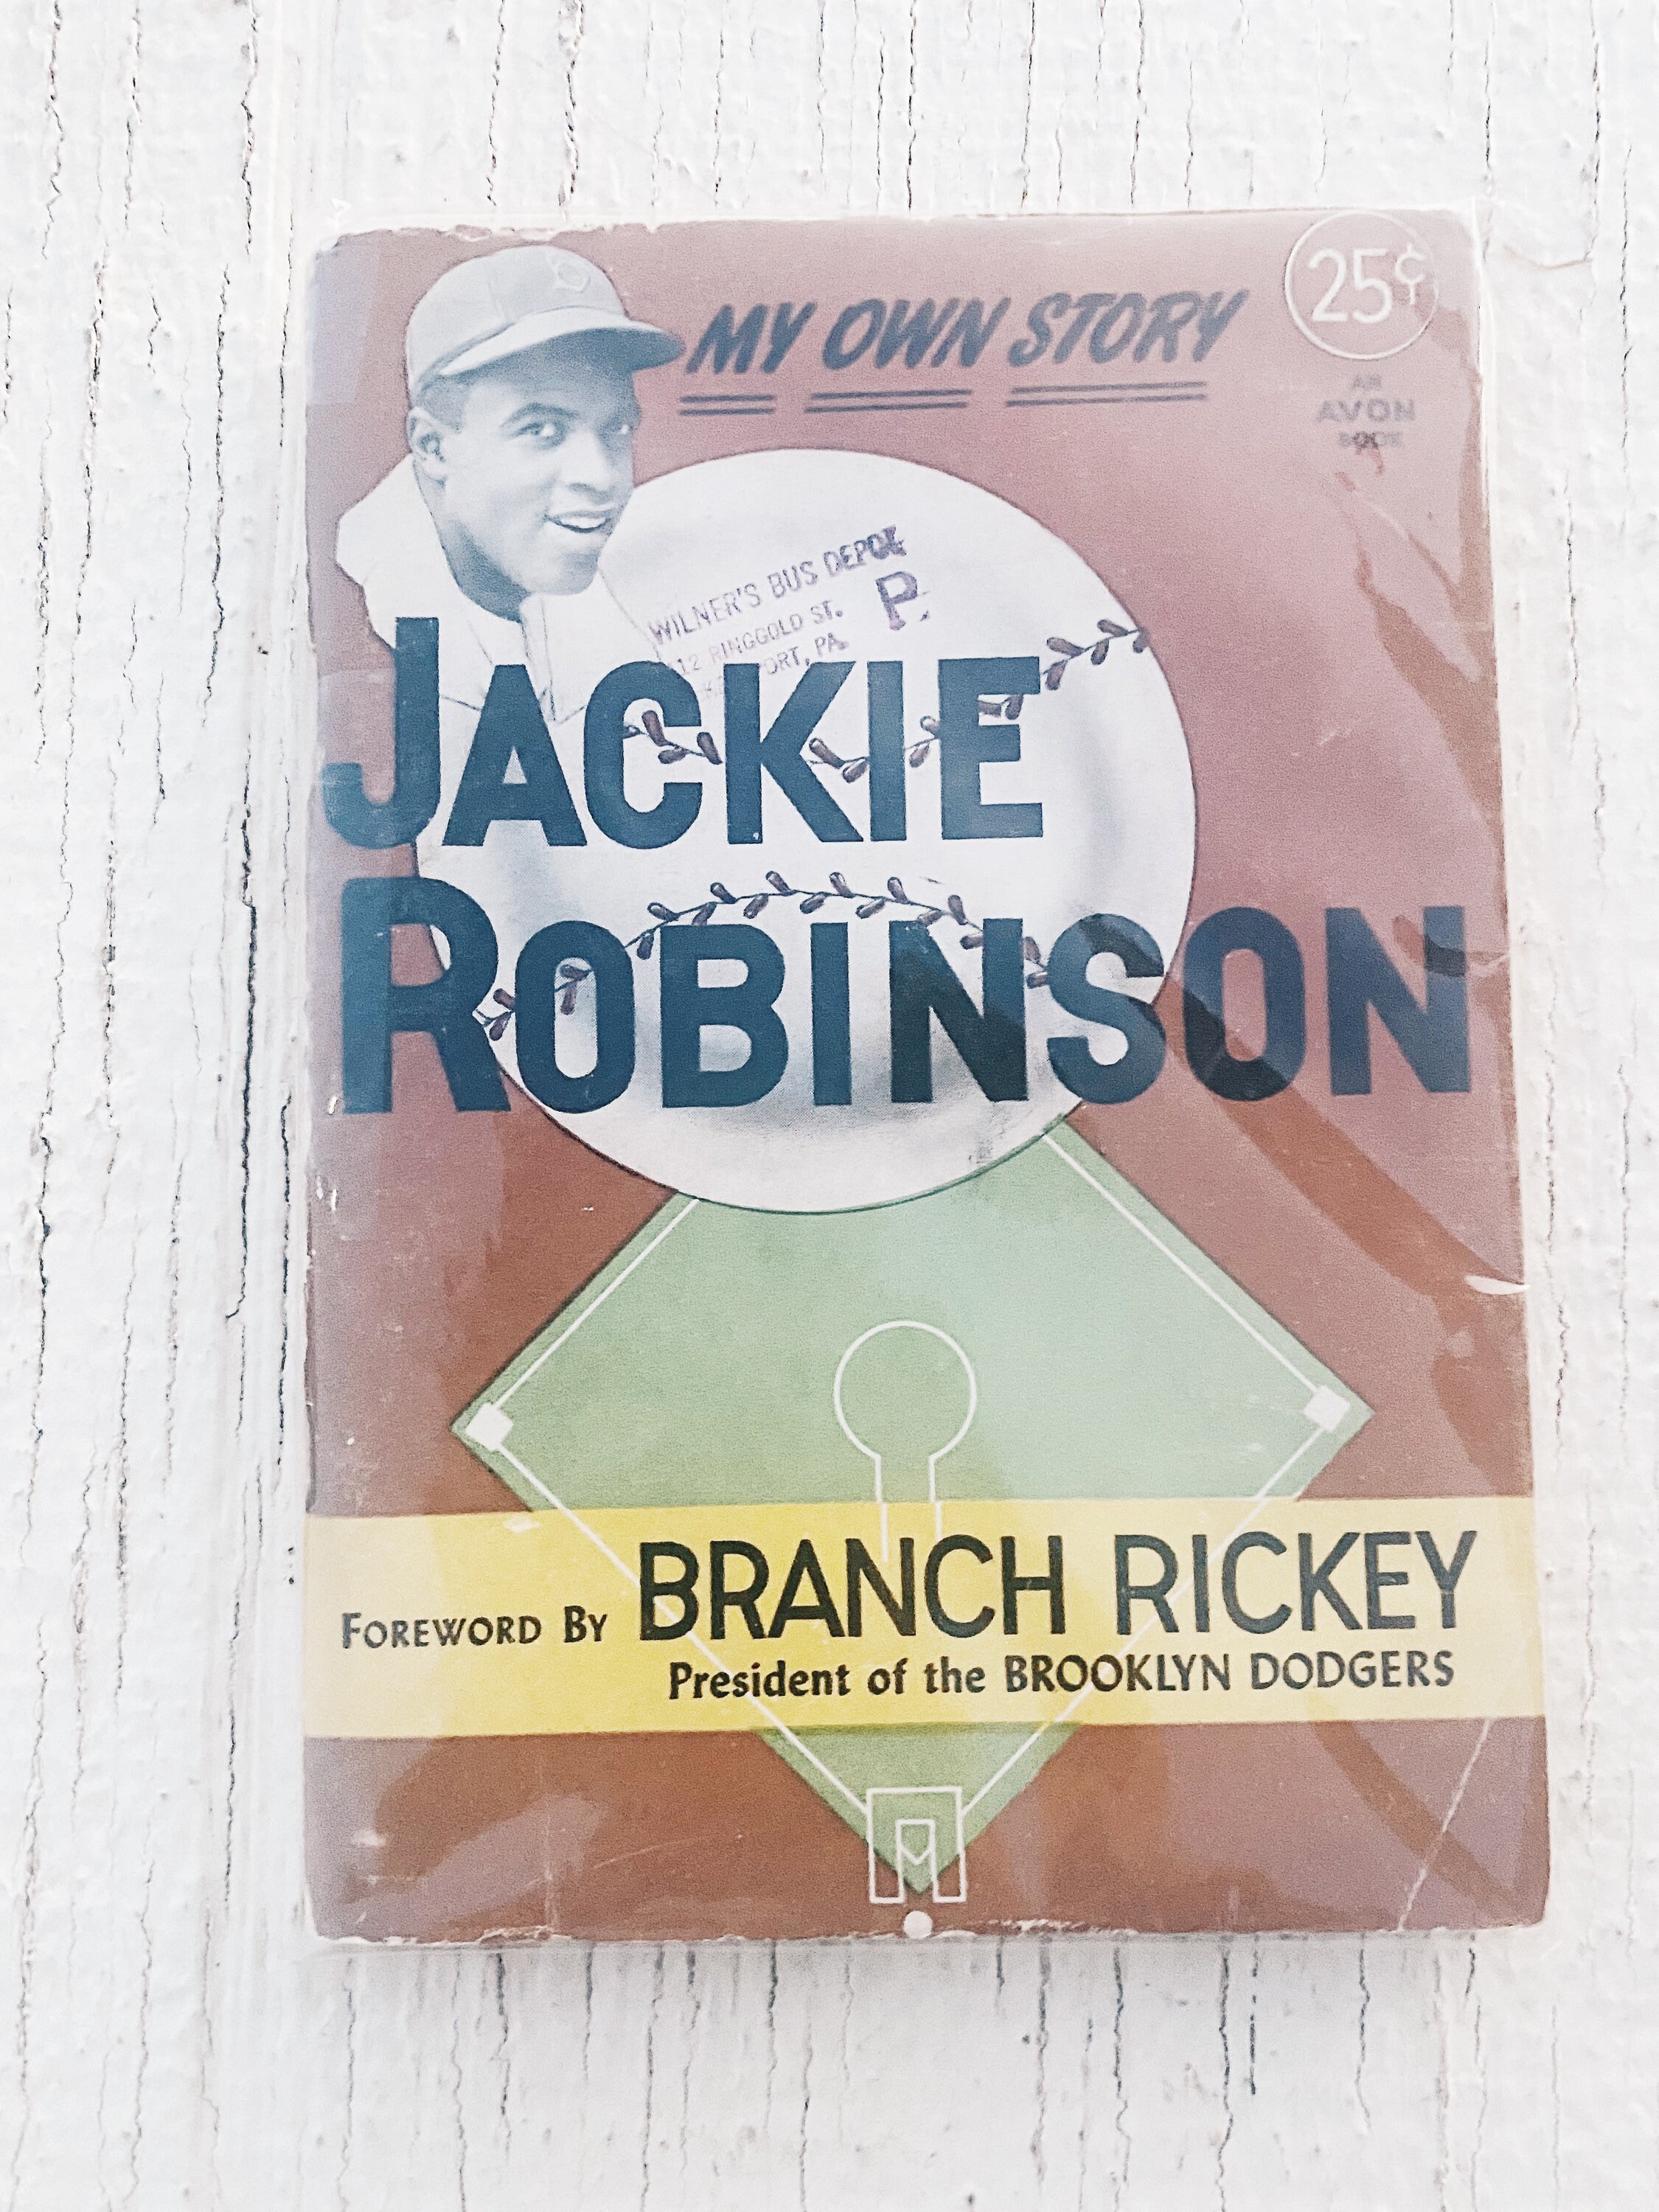 1951 Jackie Robinson Comic Book Cover Art - Row One Brand